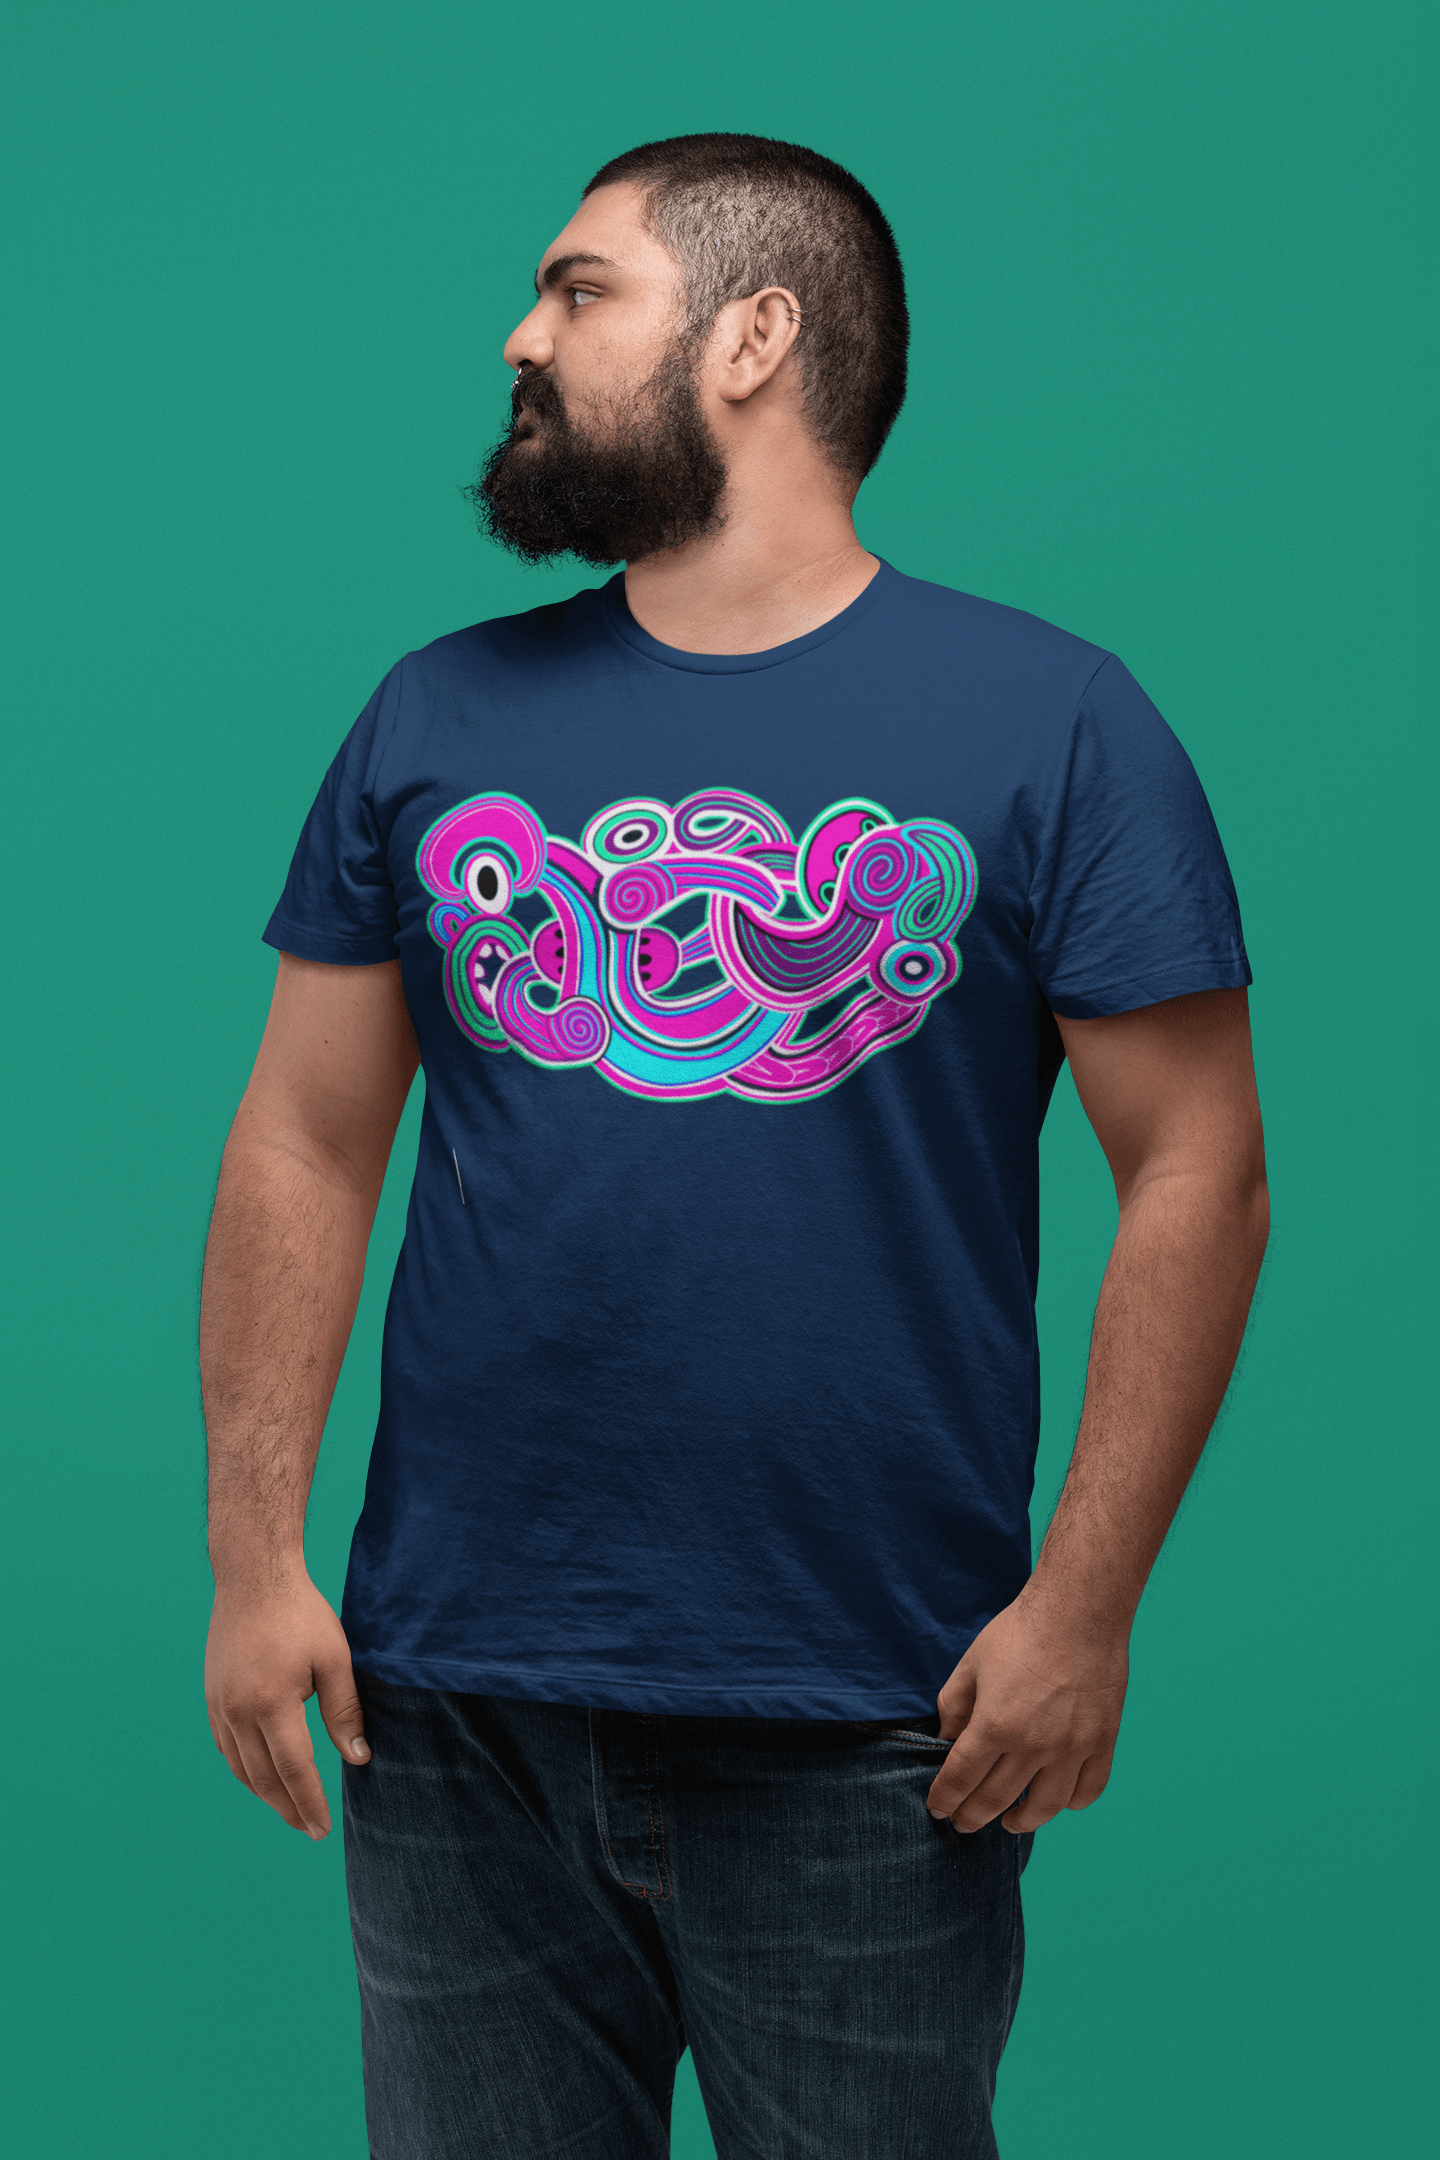 Te Tihi o Kahukura - Plus Size T-Shirt (Pink Design) - River Jayden Art